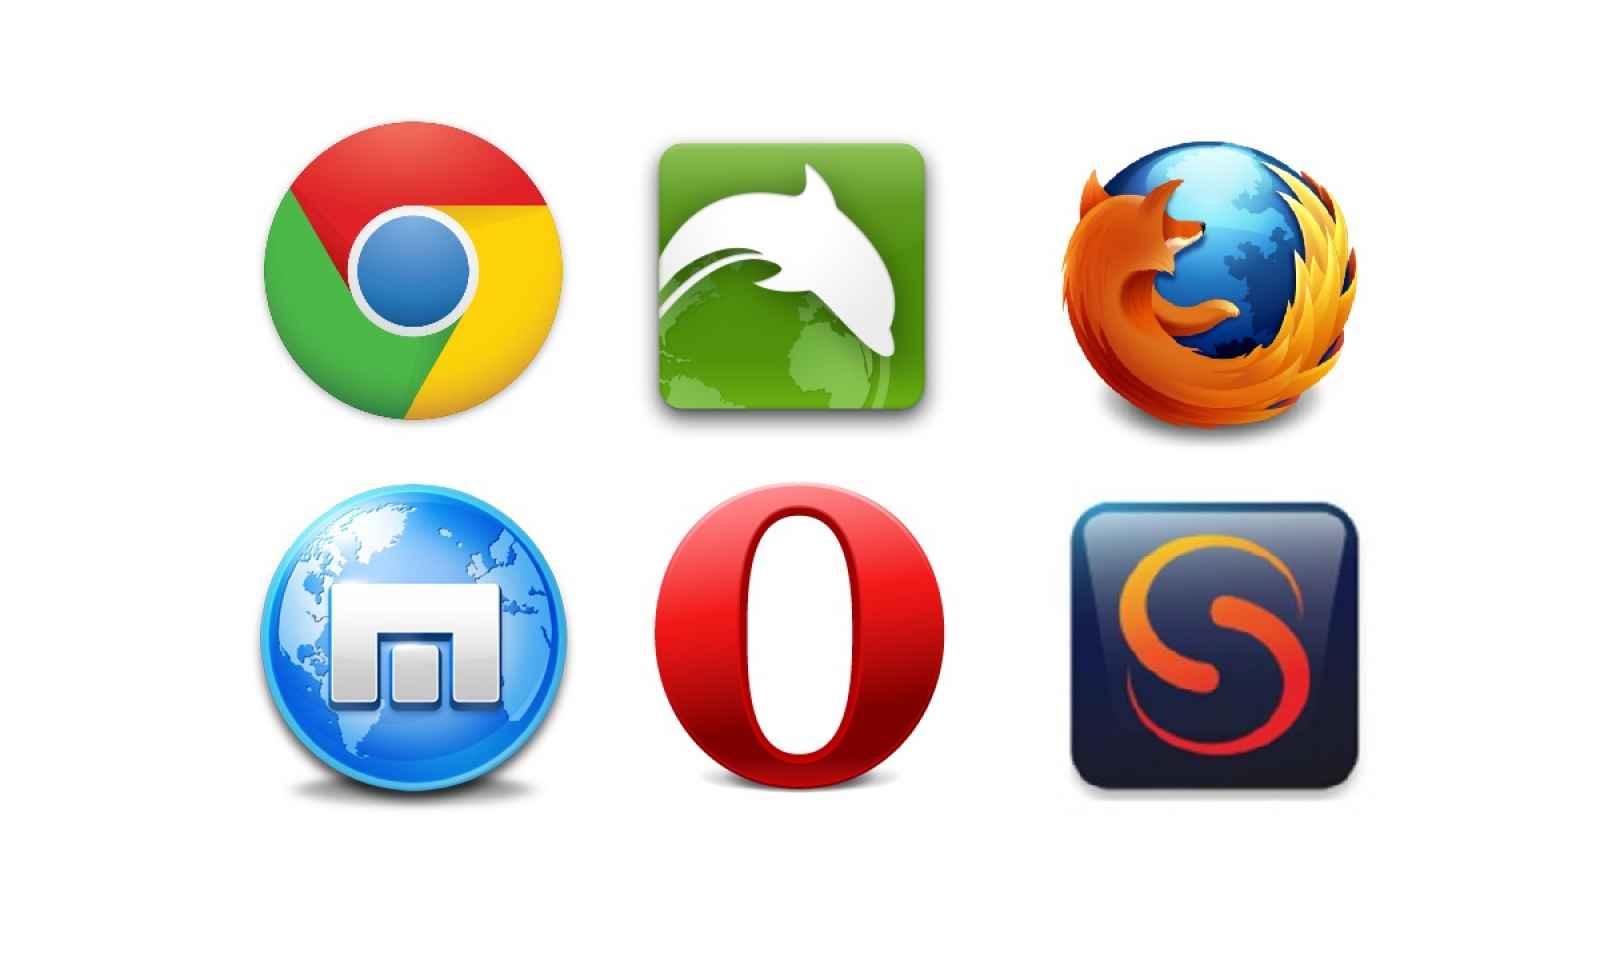 Browser download. Браузеры. Веб браузер. Современные веб браузеры. Логотипы интернет браузеров.